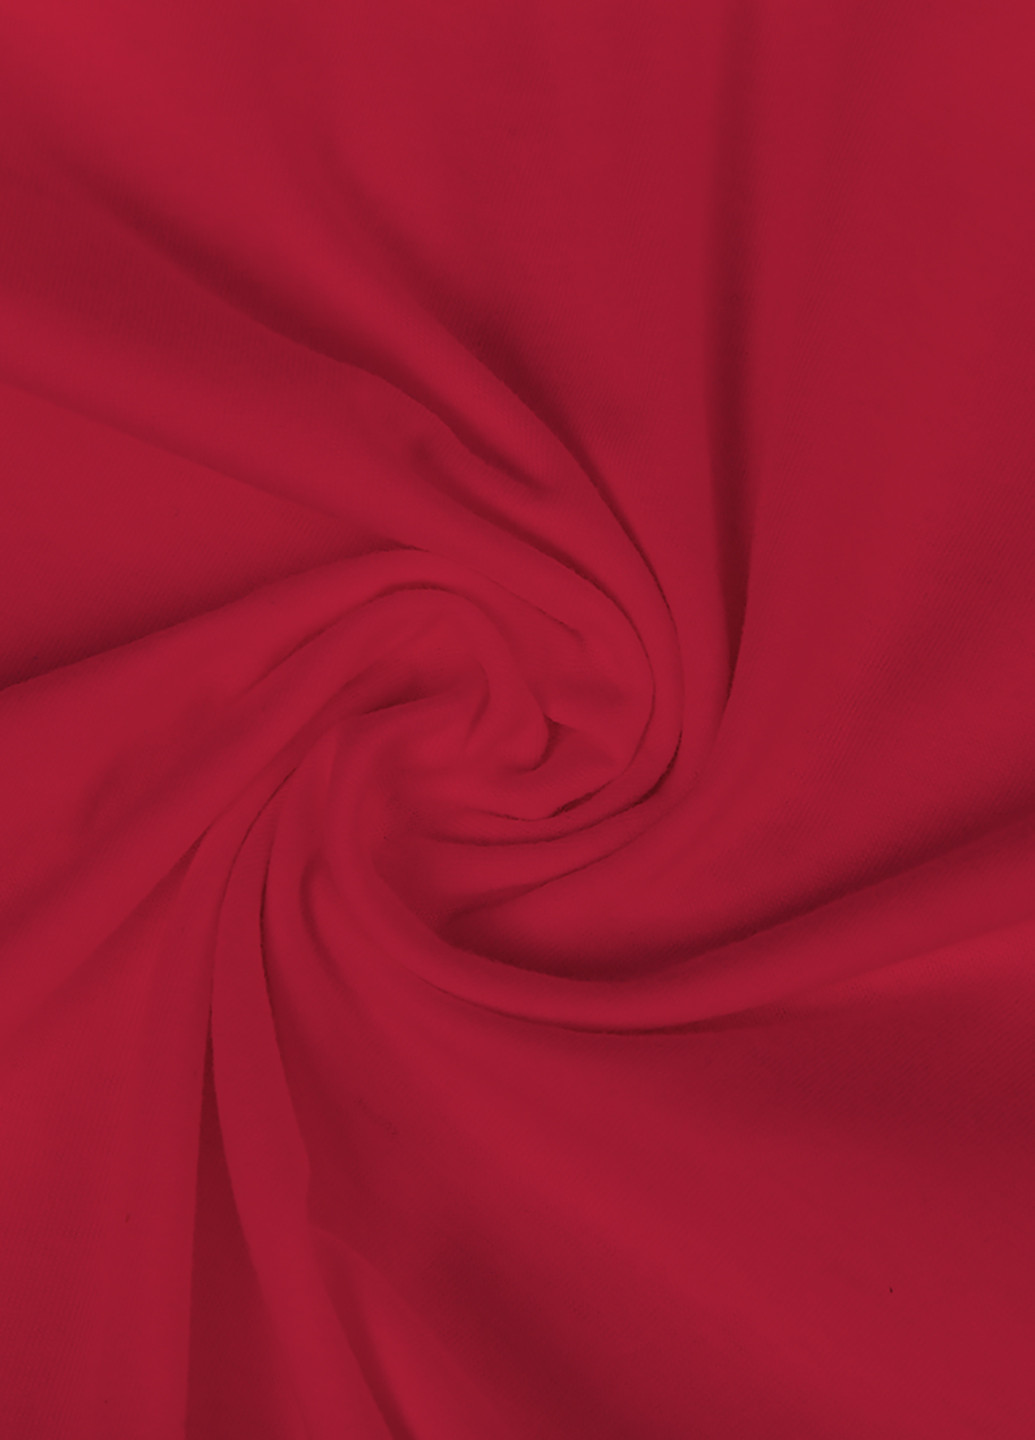 Красная демисезонная футболка детская лайк единорог (likee unicorn)(9224-1037) MobiPrint